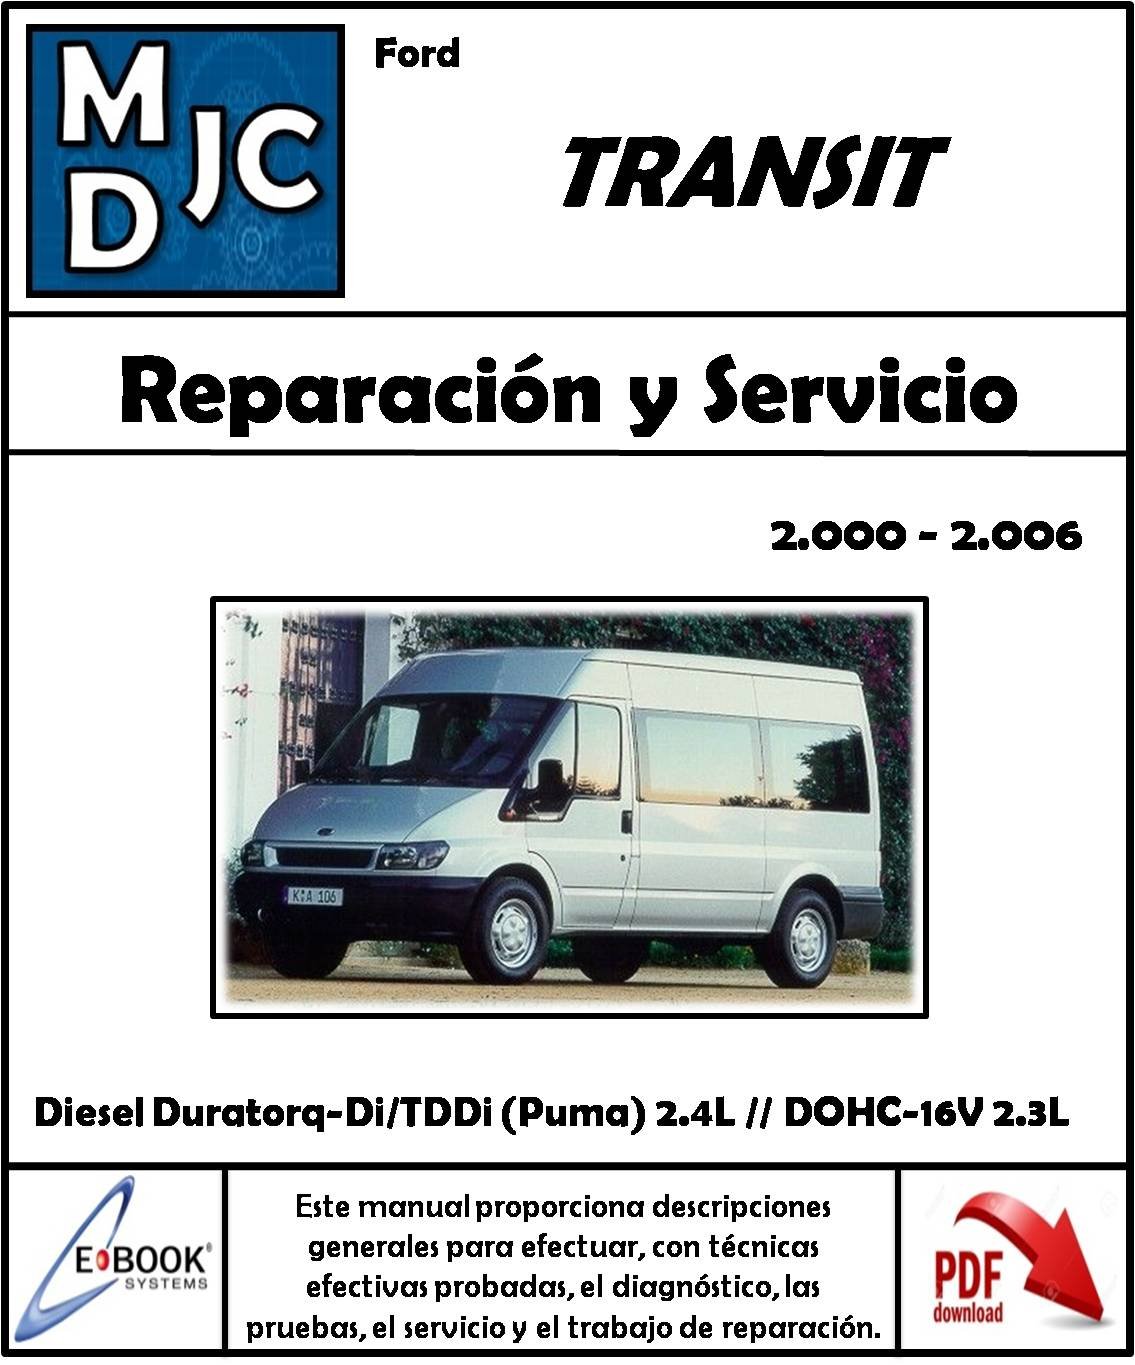 Ford Transit 2000 - 2006